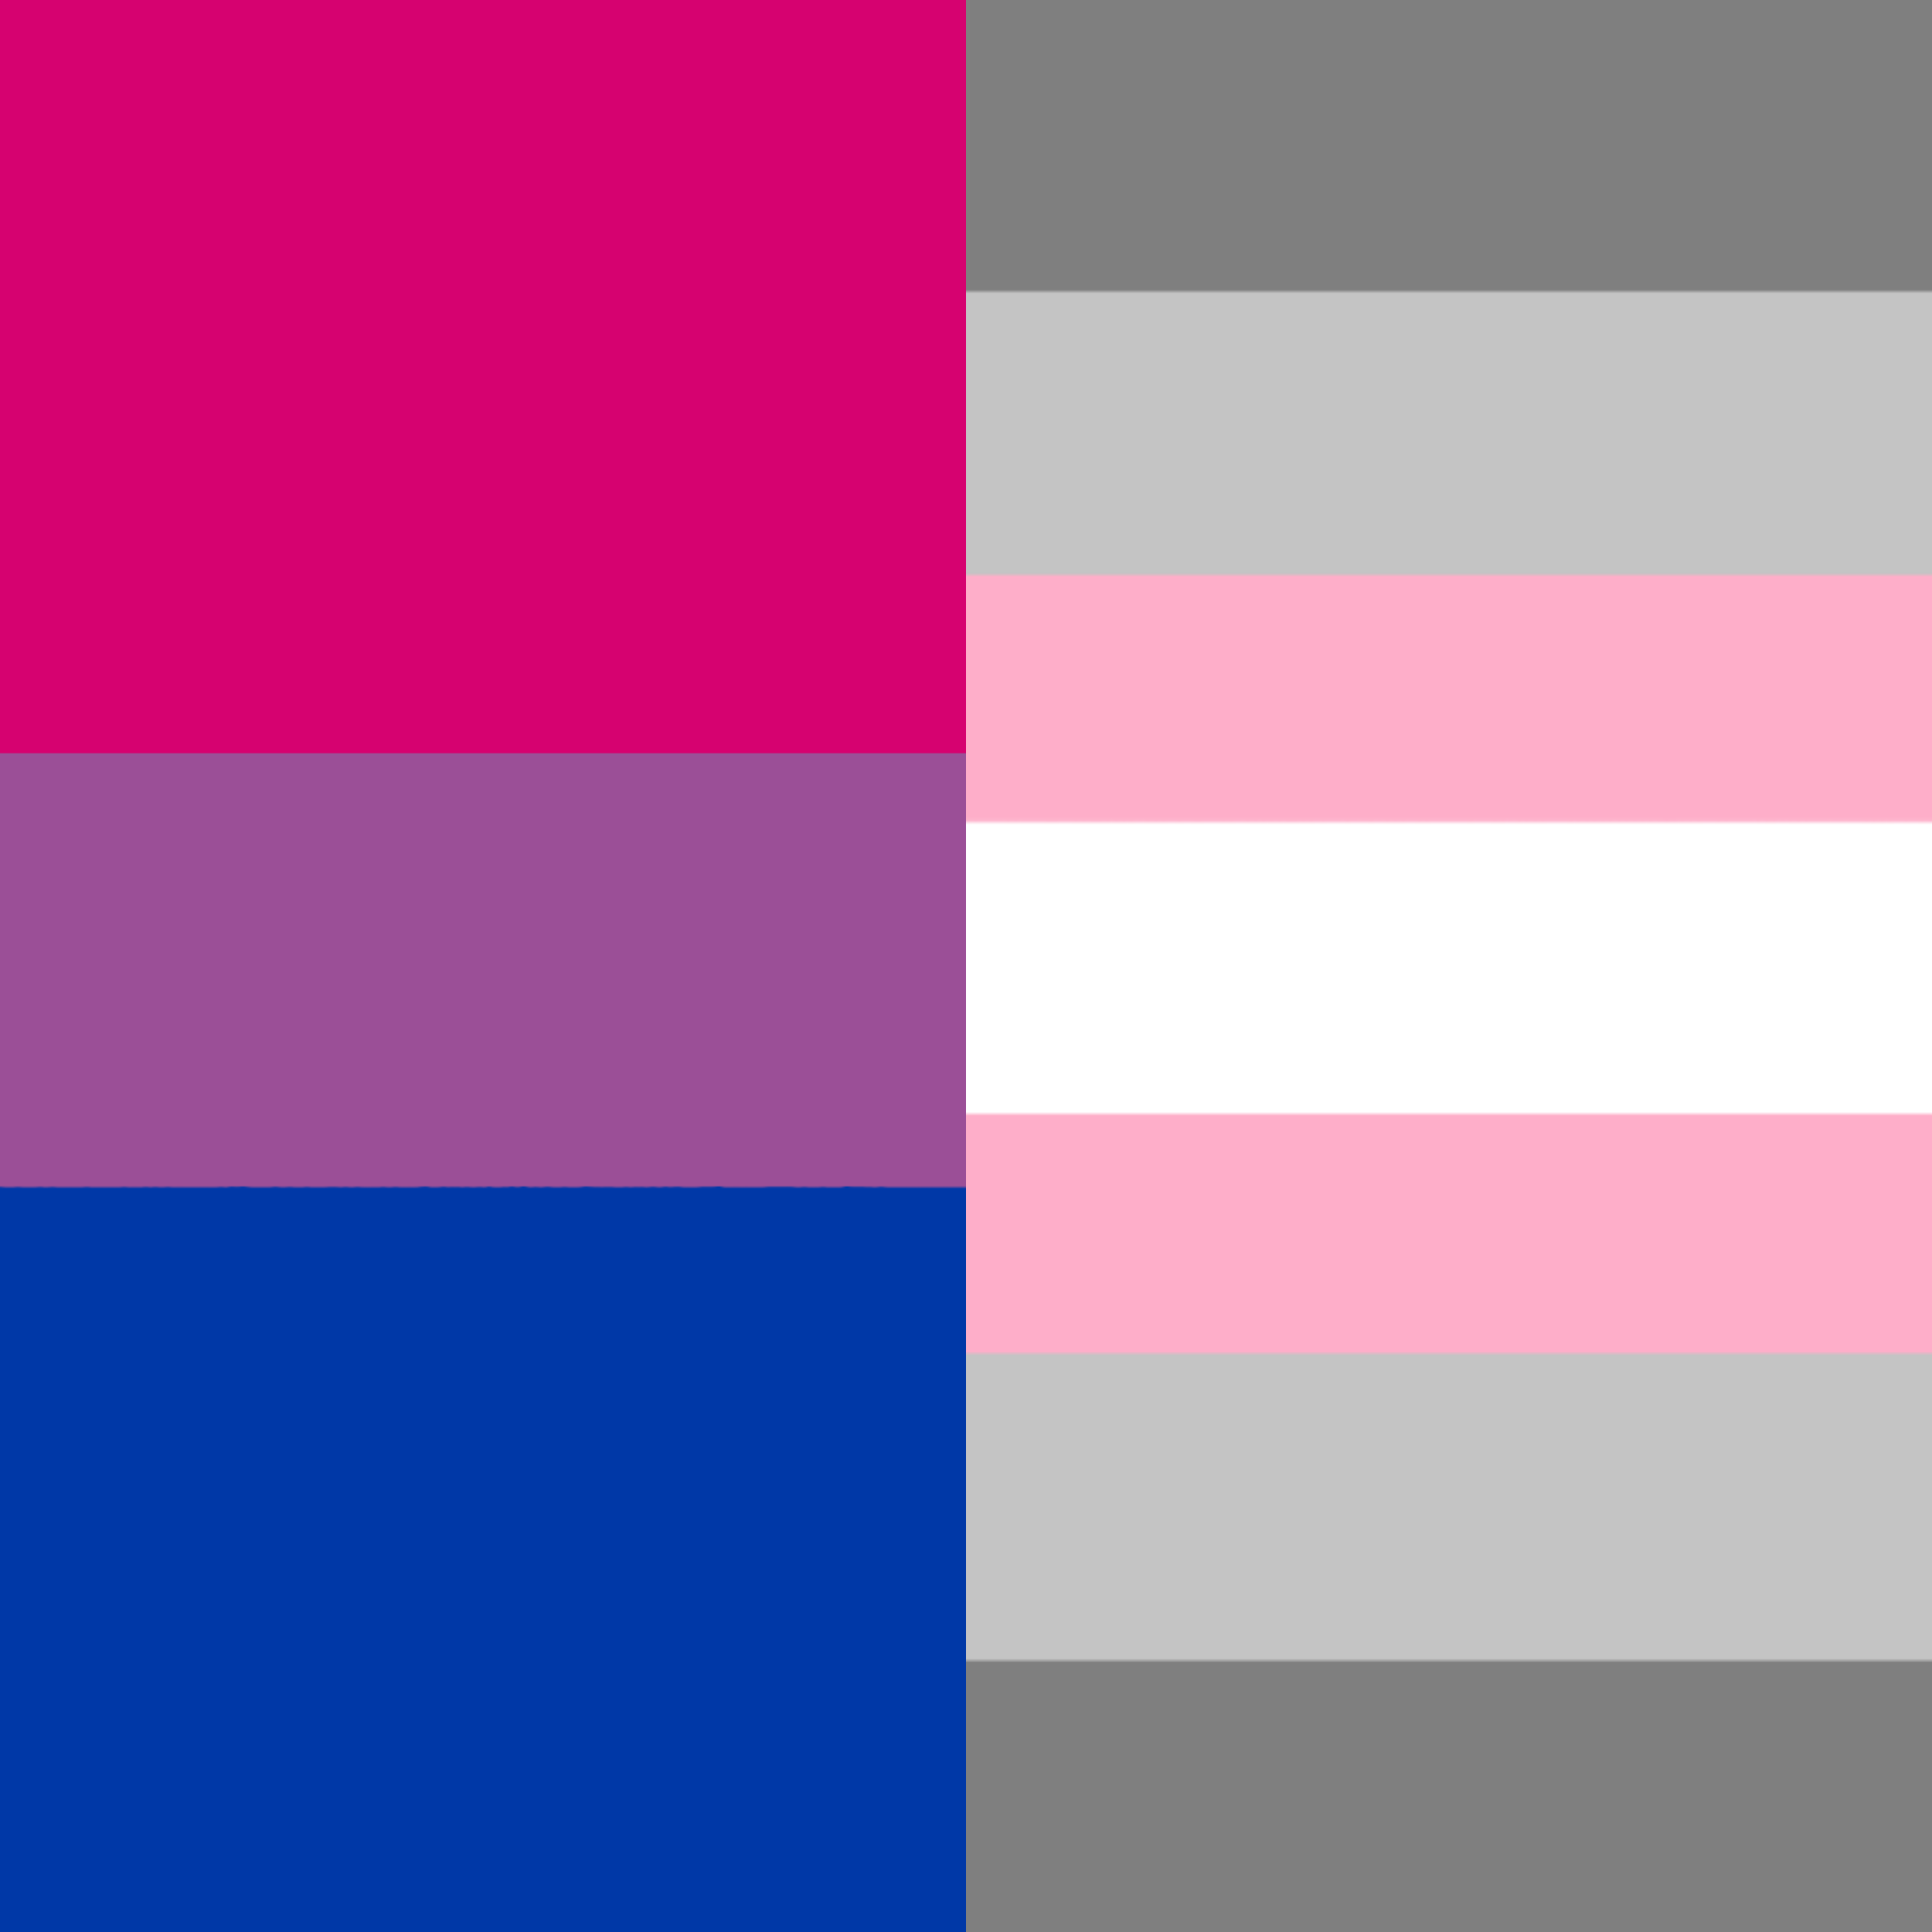 bisexual demigirl pride HI 302330653157201 by @squarerooto.